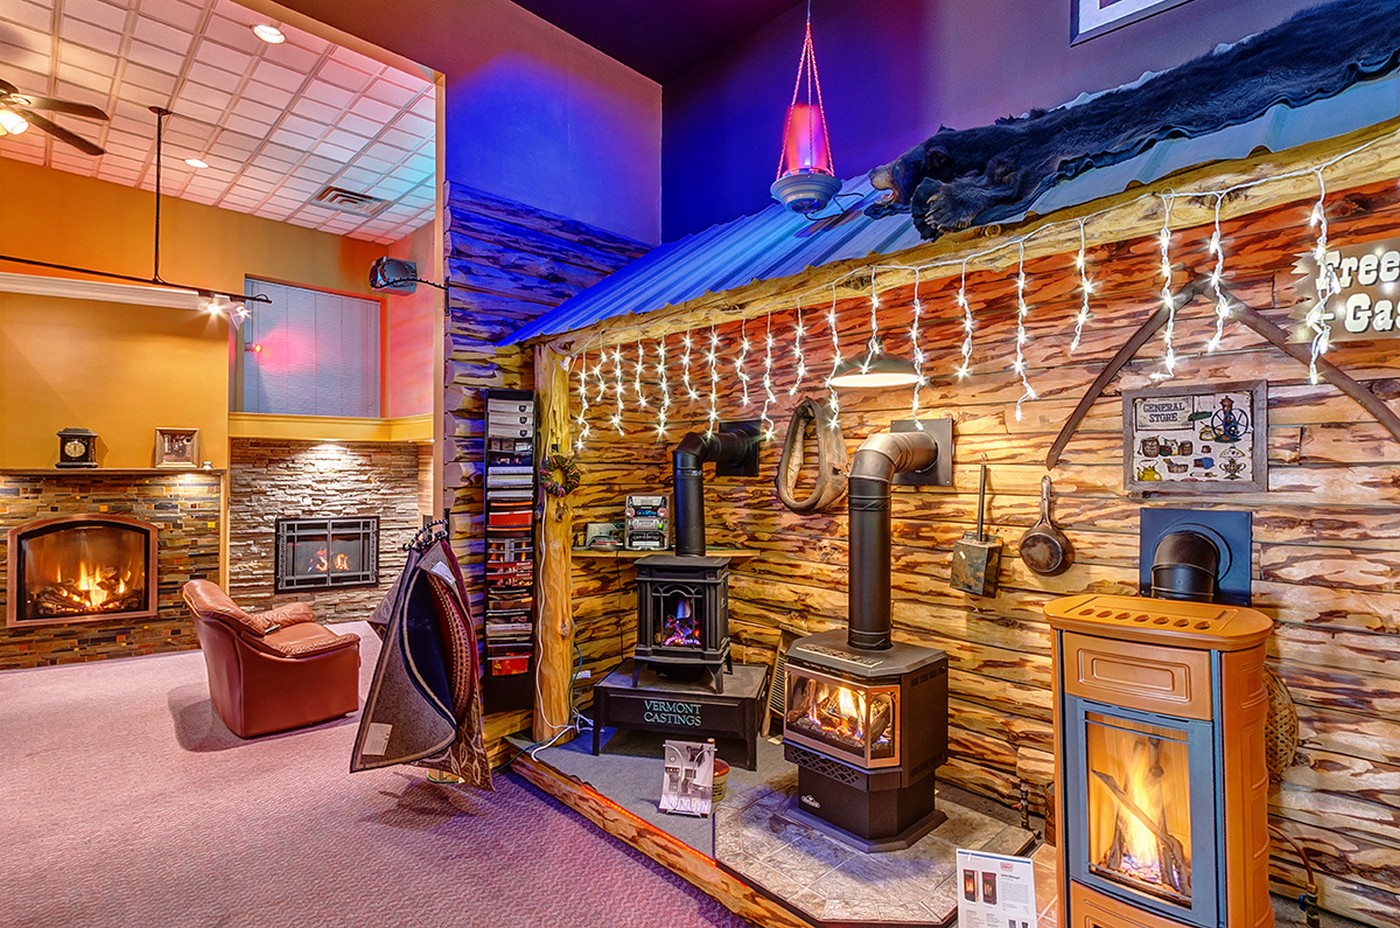 ANC Heating Hearth Fireplace Showroom Binghamton NY